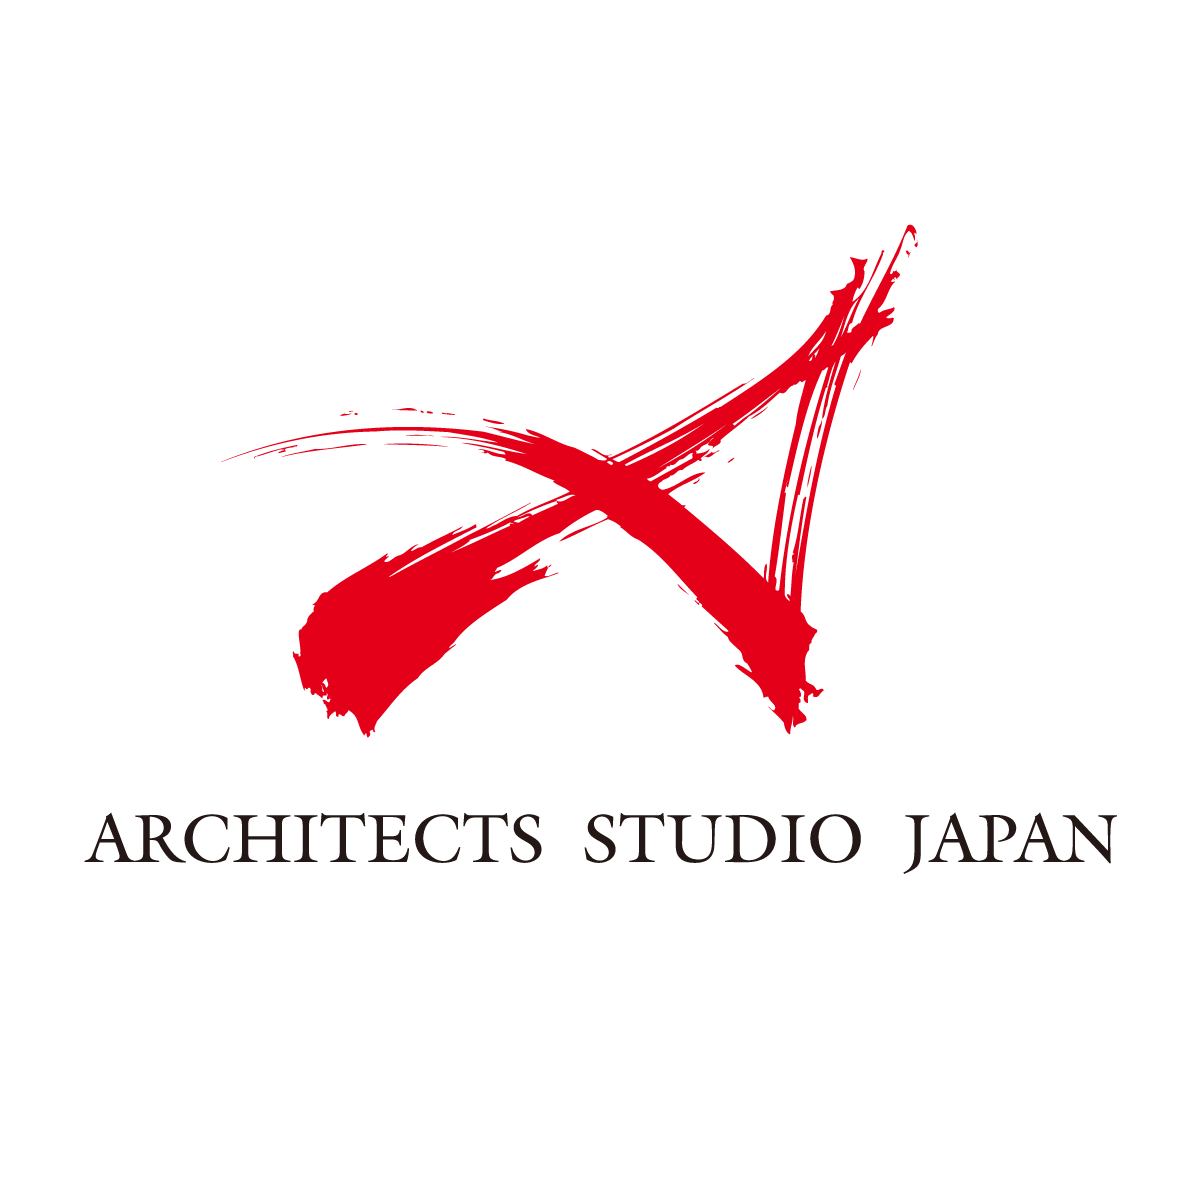 ARCHITECTS STUDIO JAPAN